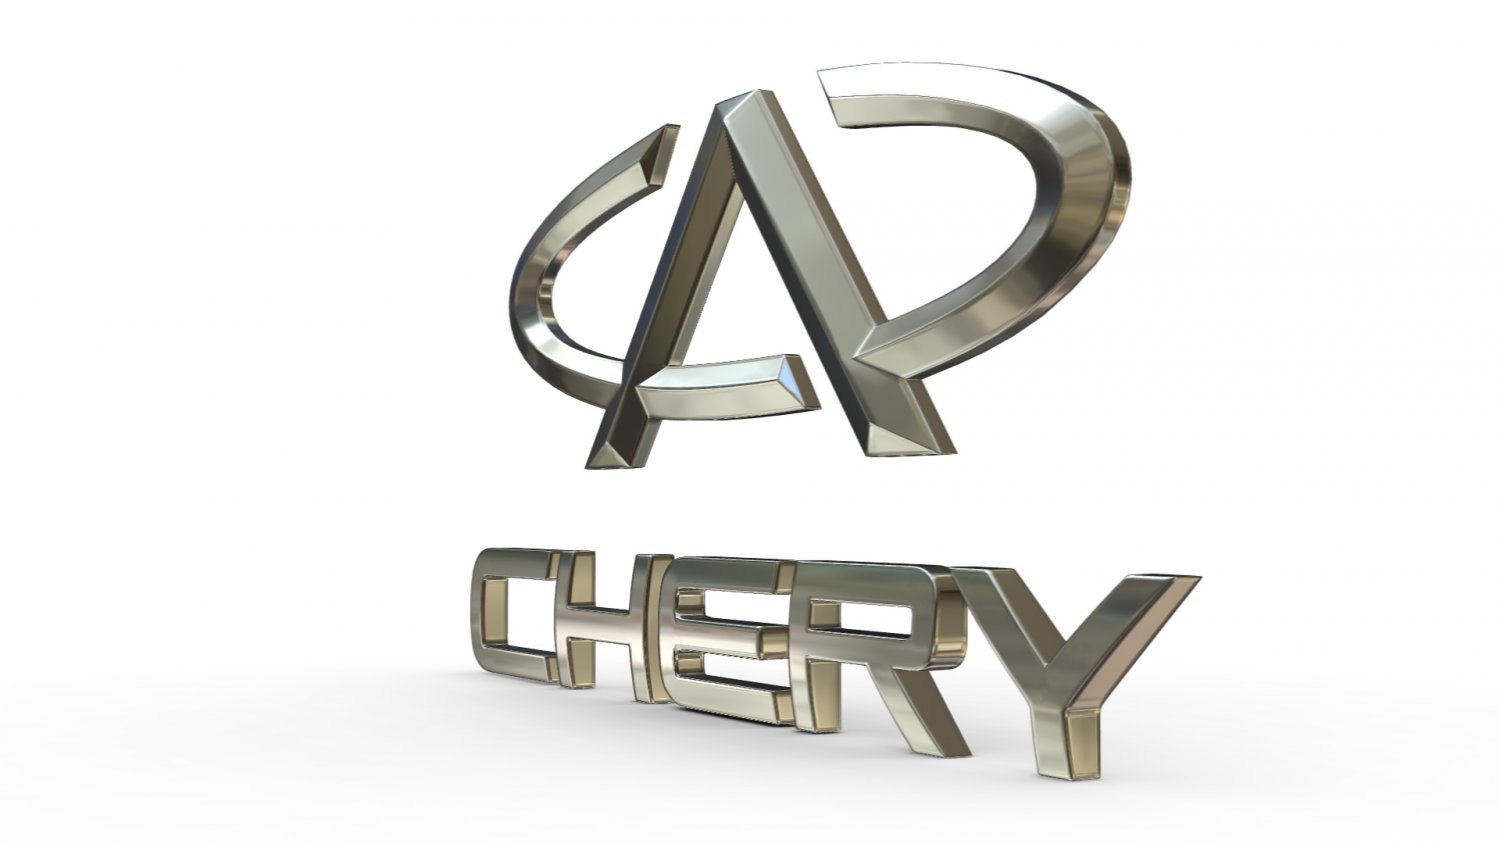 Chery логотип. Chery эмблема. Логотип чери Тигго. Значок черри машины. 3d эмблема чери.